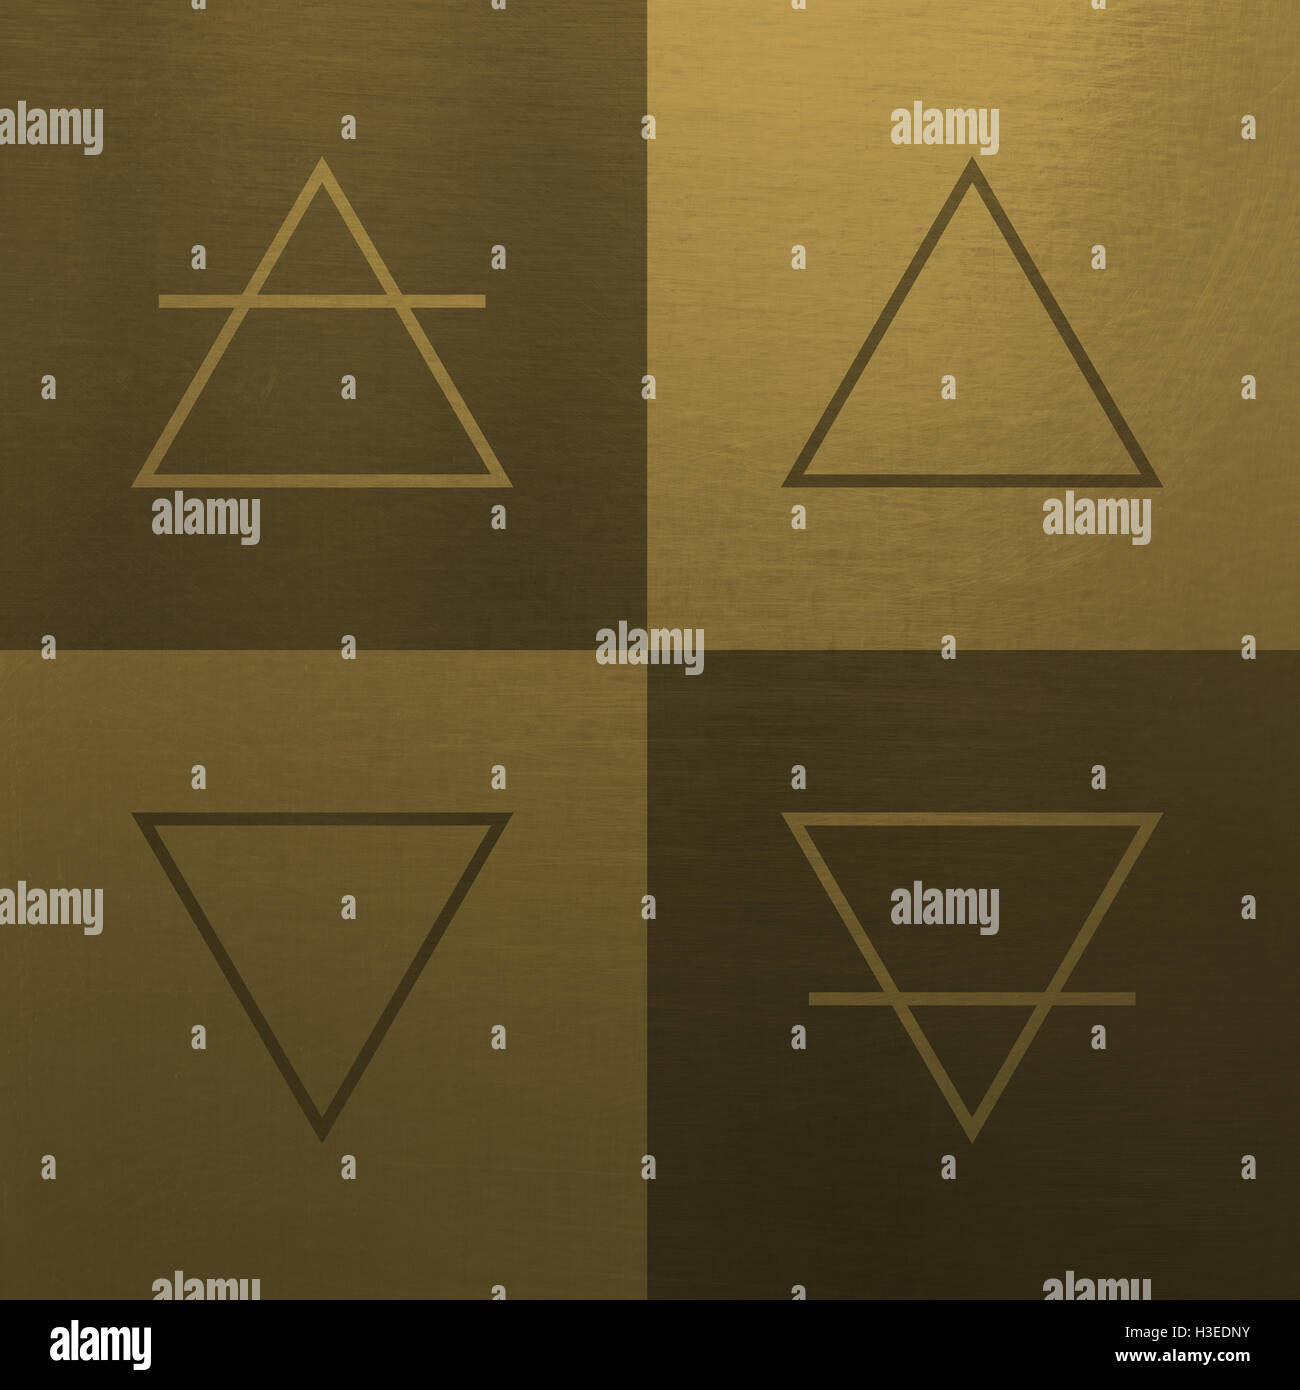 Alchemy - Four Elements (gold 2) Stock Photo